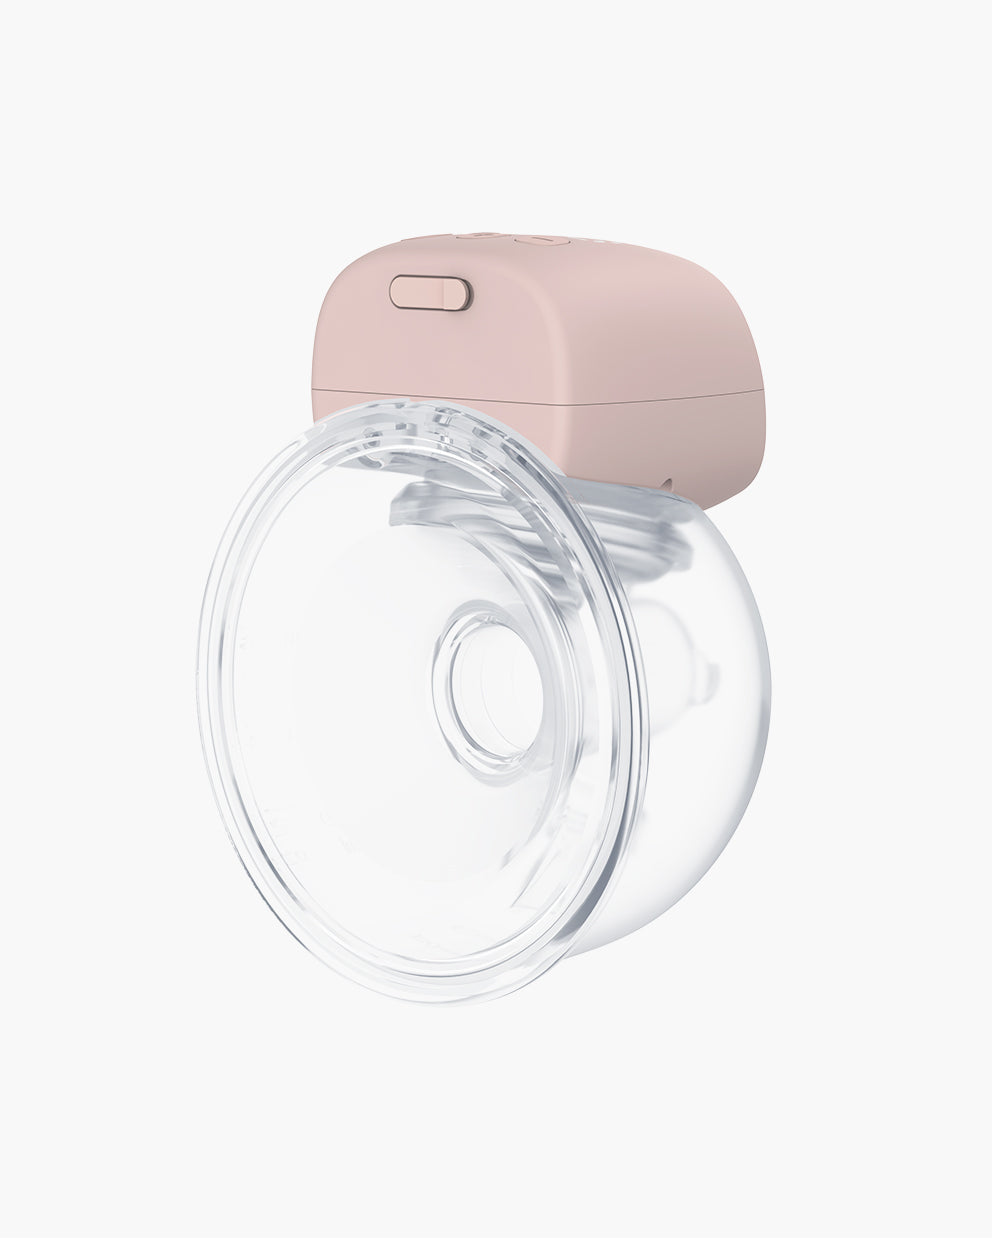 S9 Pro Hands Free Wearable Breast Pump - Older Version